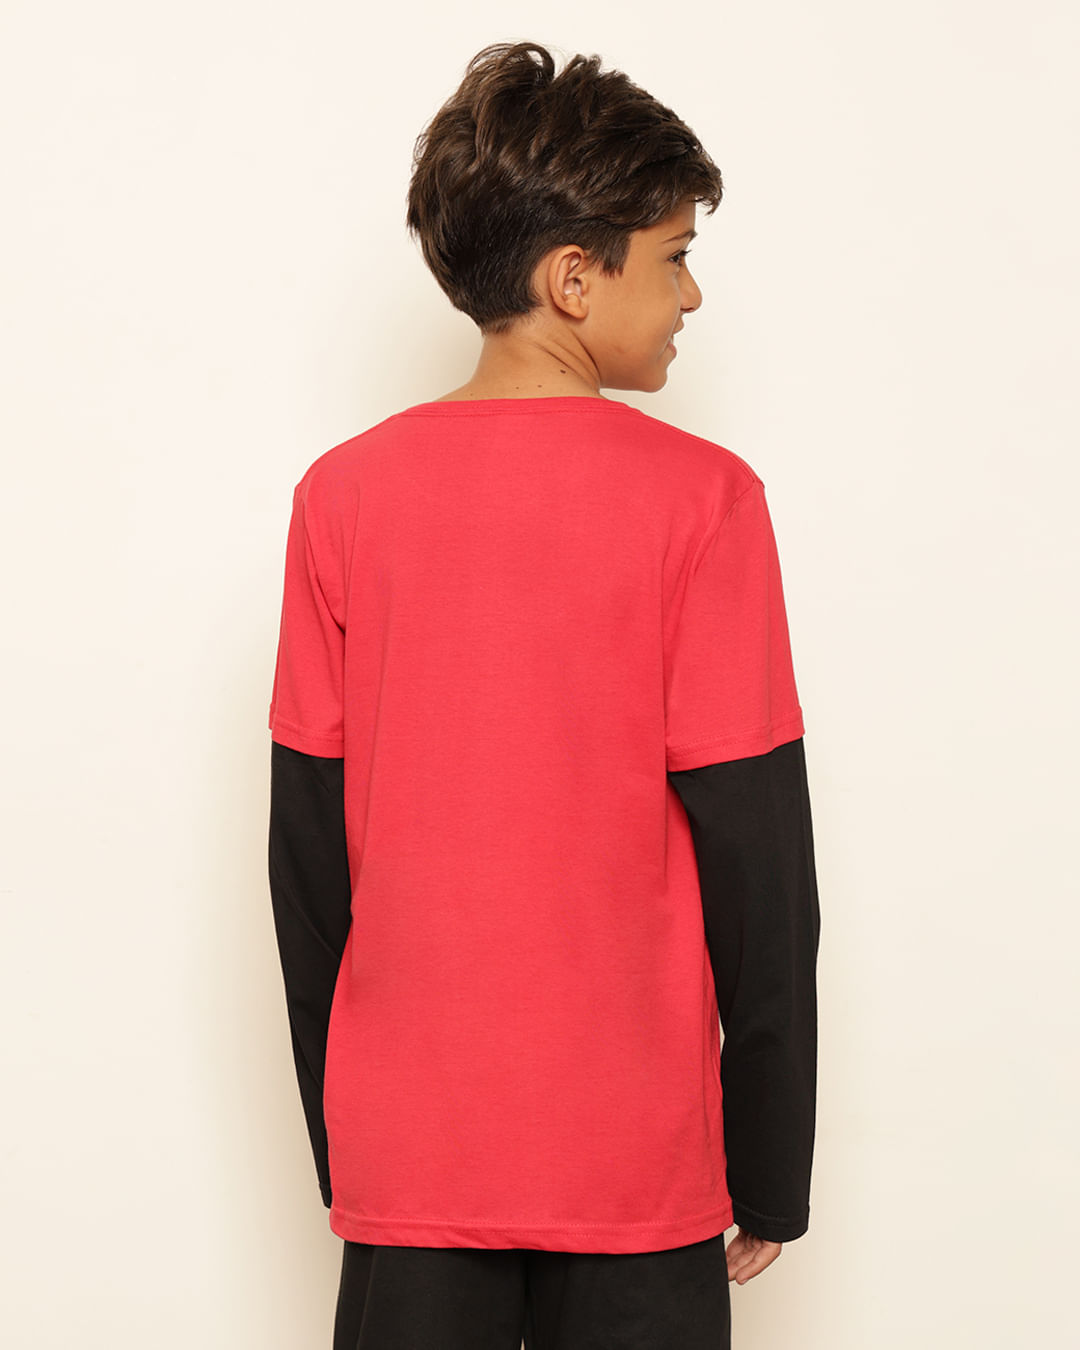 Camiseta-T39177-Ml-M-1016-Urbano---Vermelho-Medio